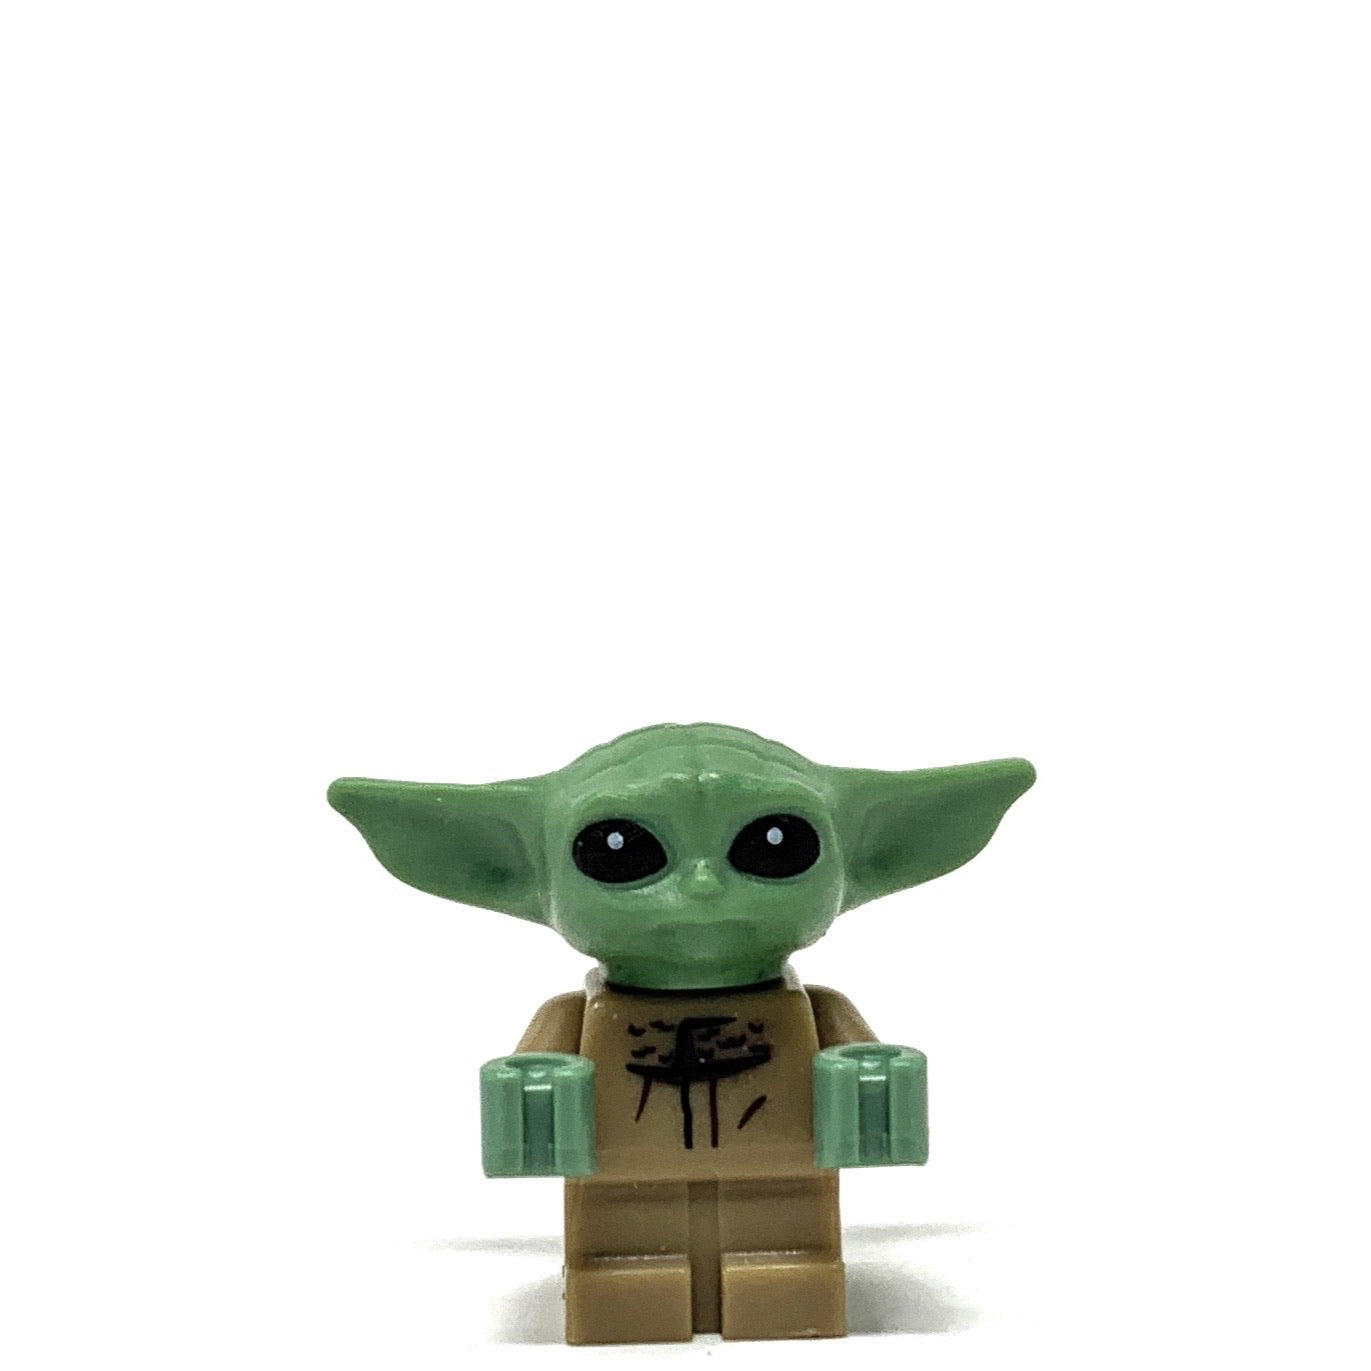 The Child, Baby Yoda (Mandalorian) - LEGO Star Wars Minifigure (2020)